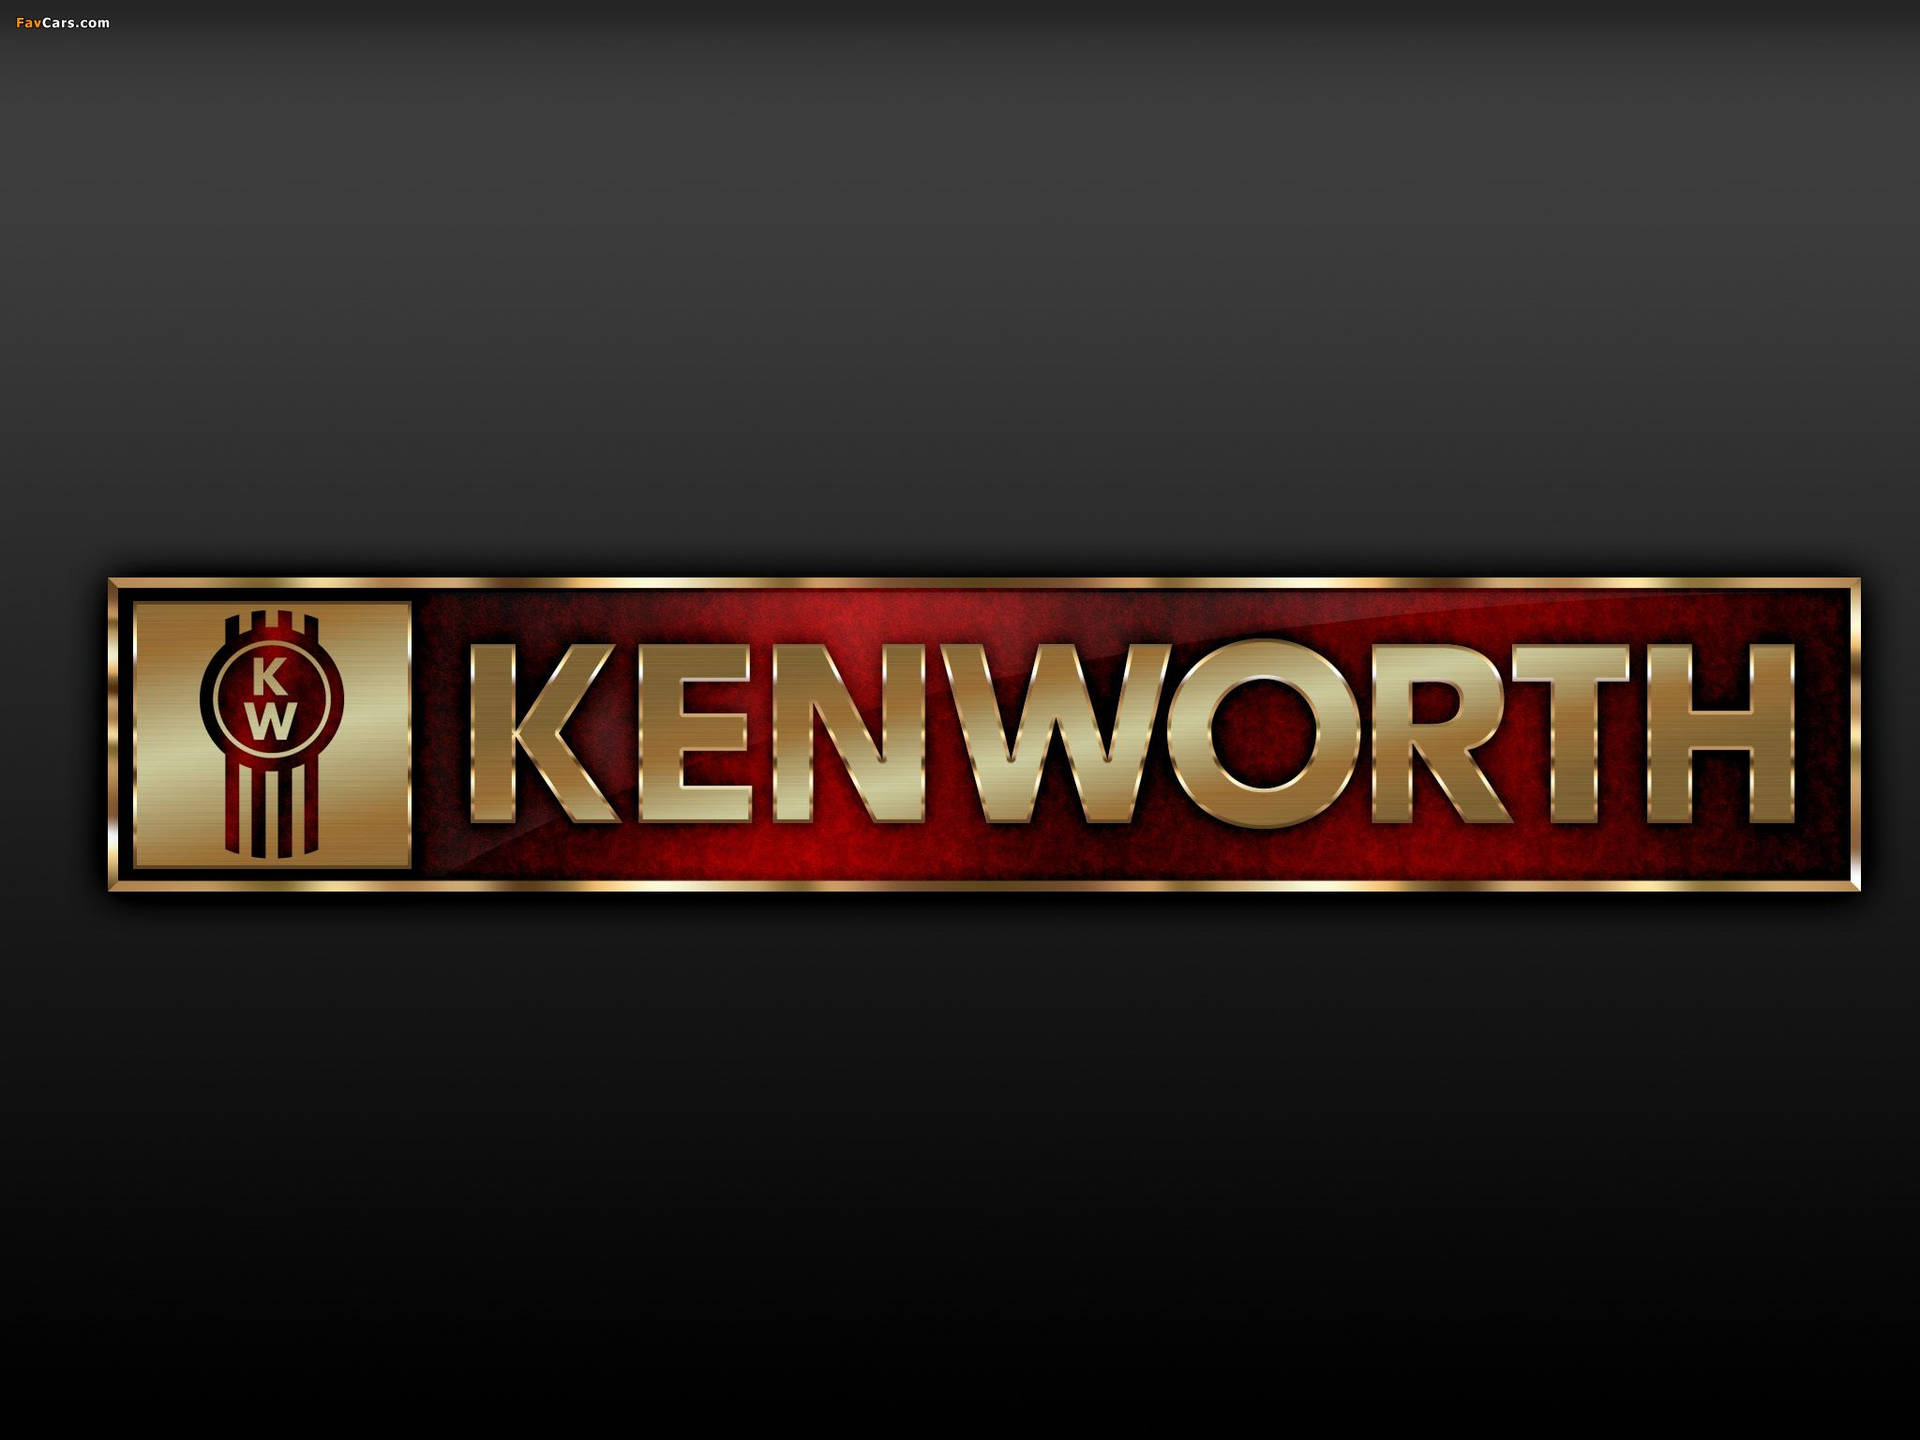 Free Kenworth Wallpaper Downloads, [100+] Kenworth Wallpapers for ...